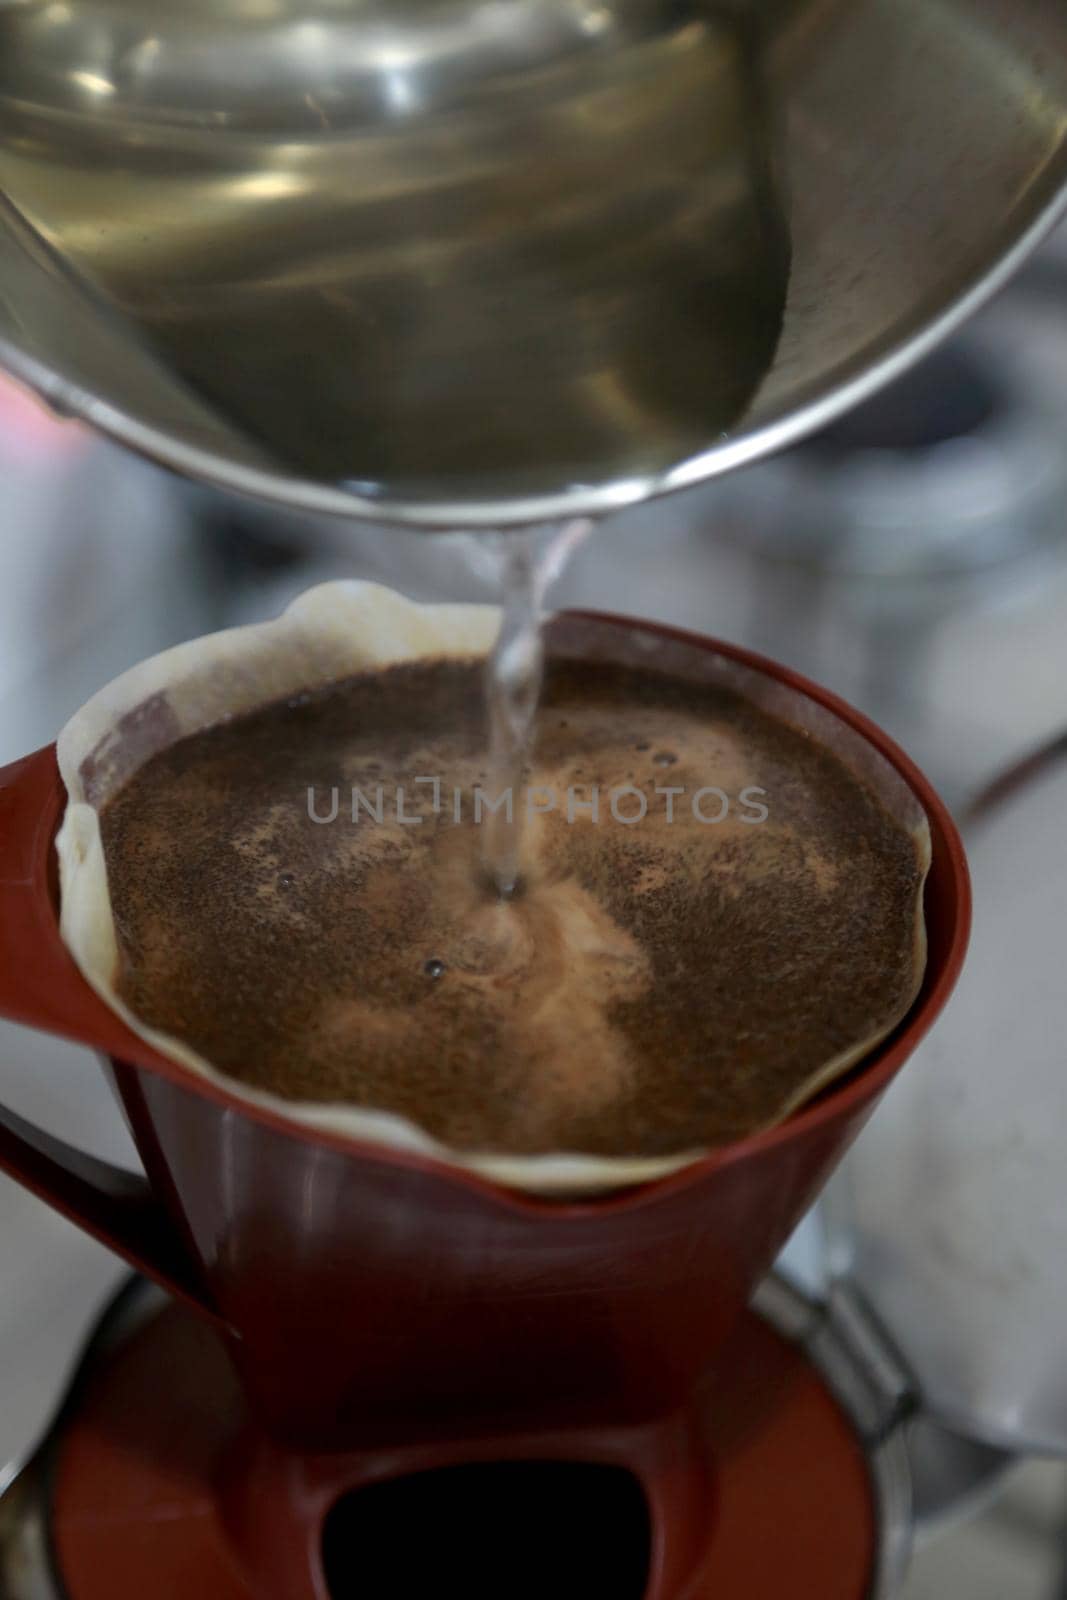 salvador, bahia / brazil - jJanuary 17, 2015: Coffee straining on filter paper in residence in Salvador city.
